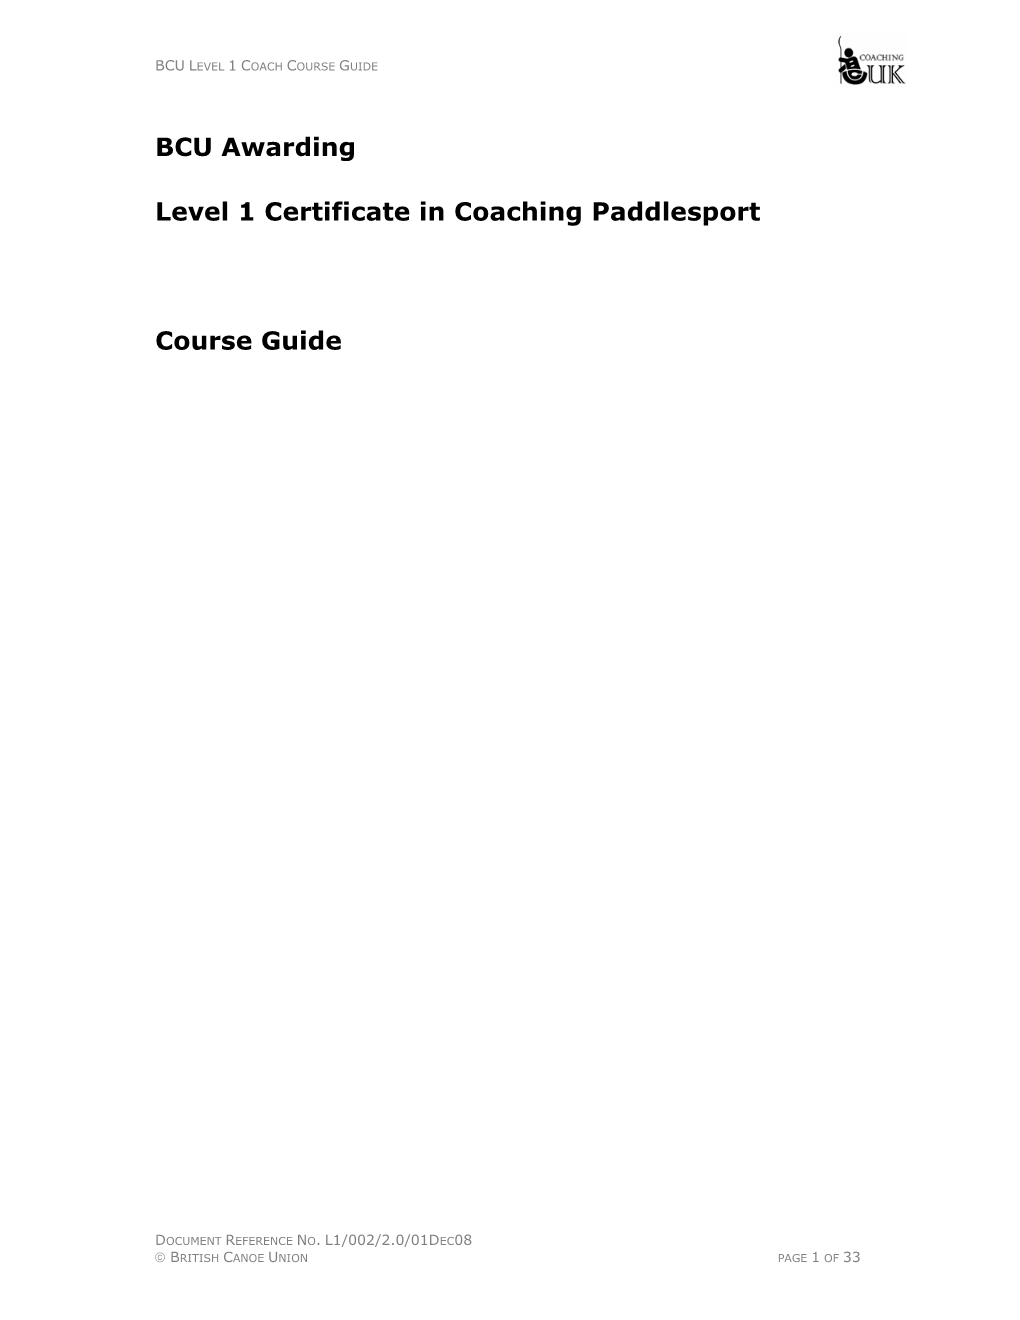 BCU Awarding Level 1 Certificate in Coaching Paddlesport Course Guide